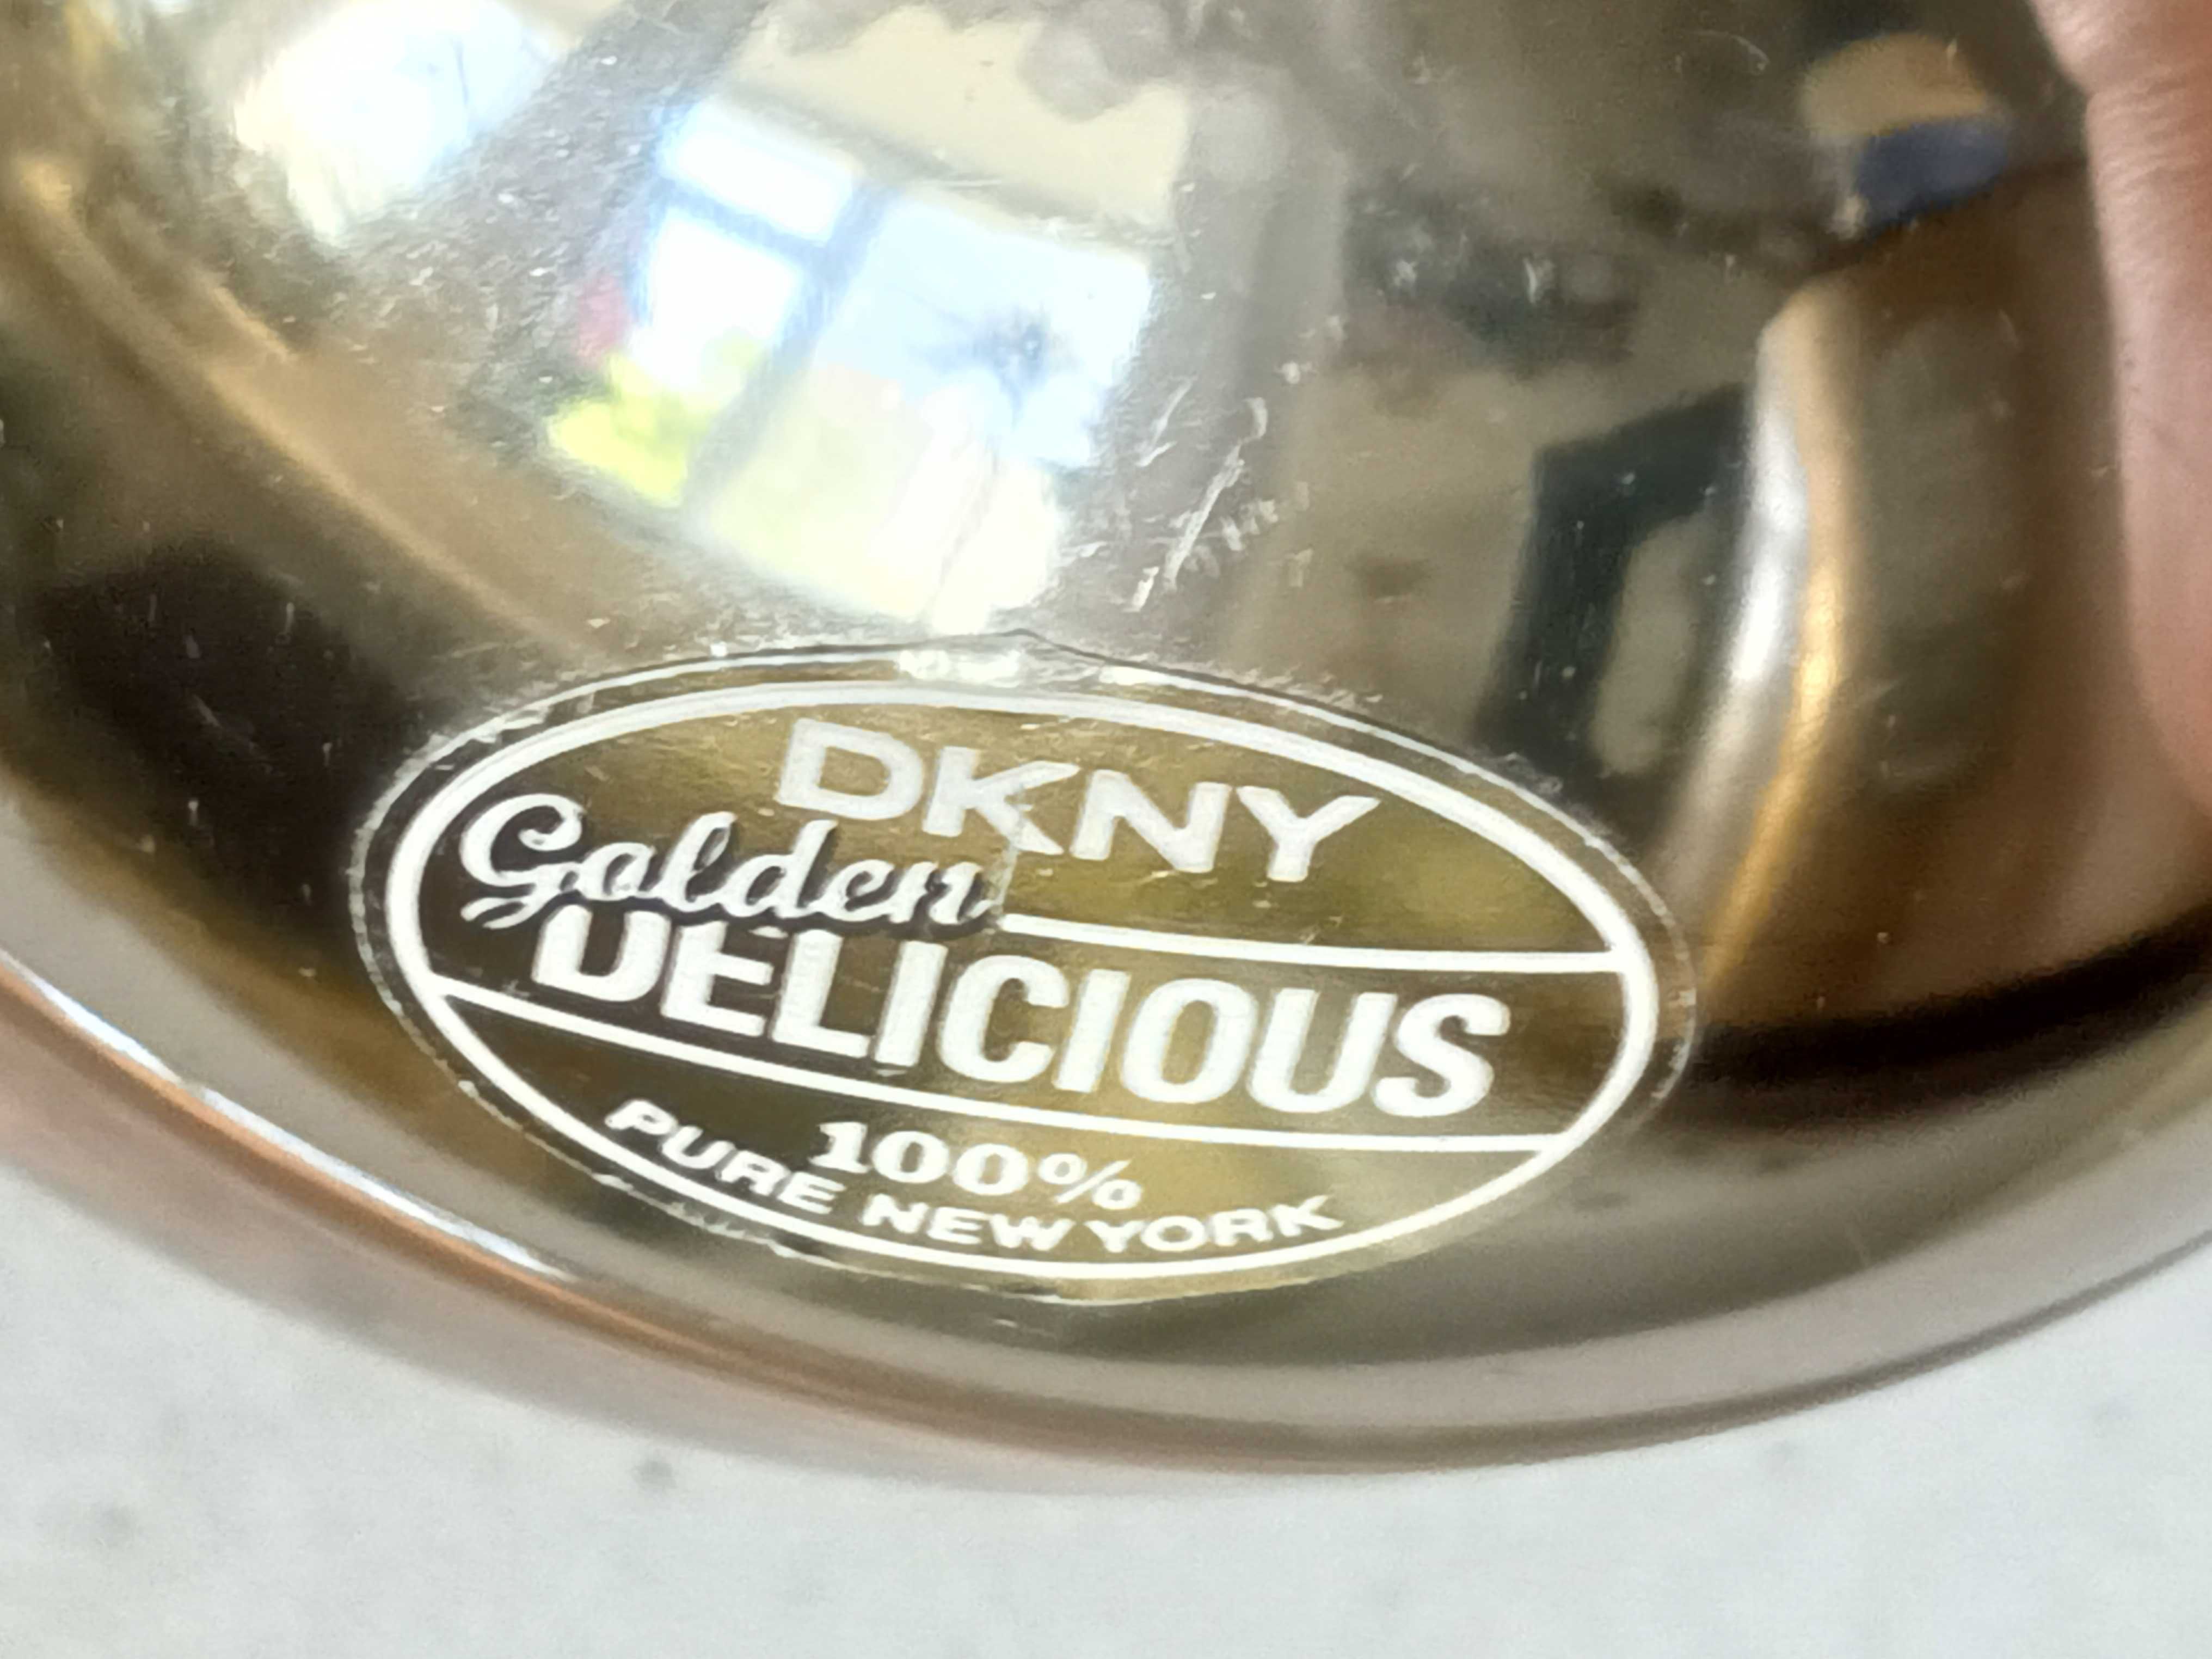 DKNY Golden delicious parfum 100 ml оригинал.